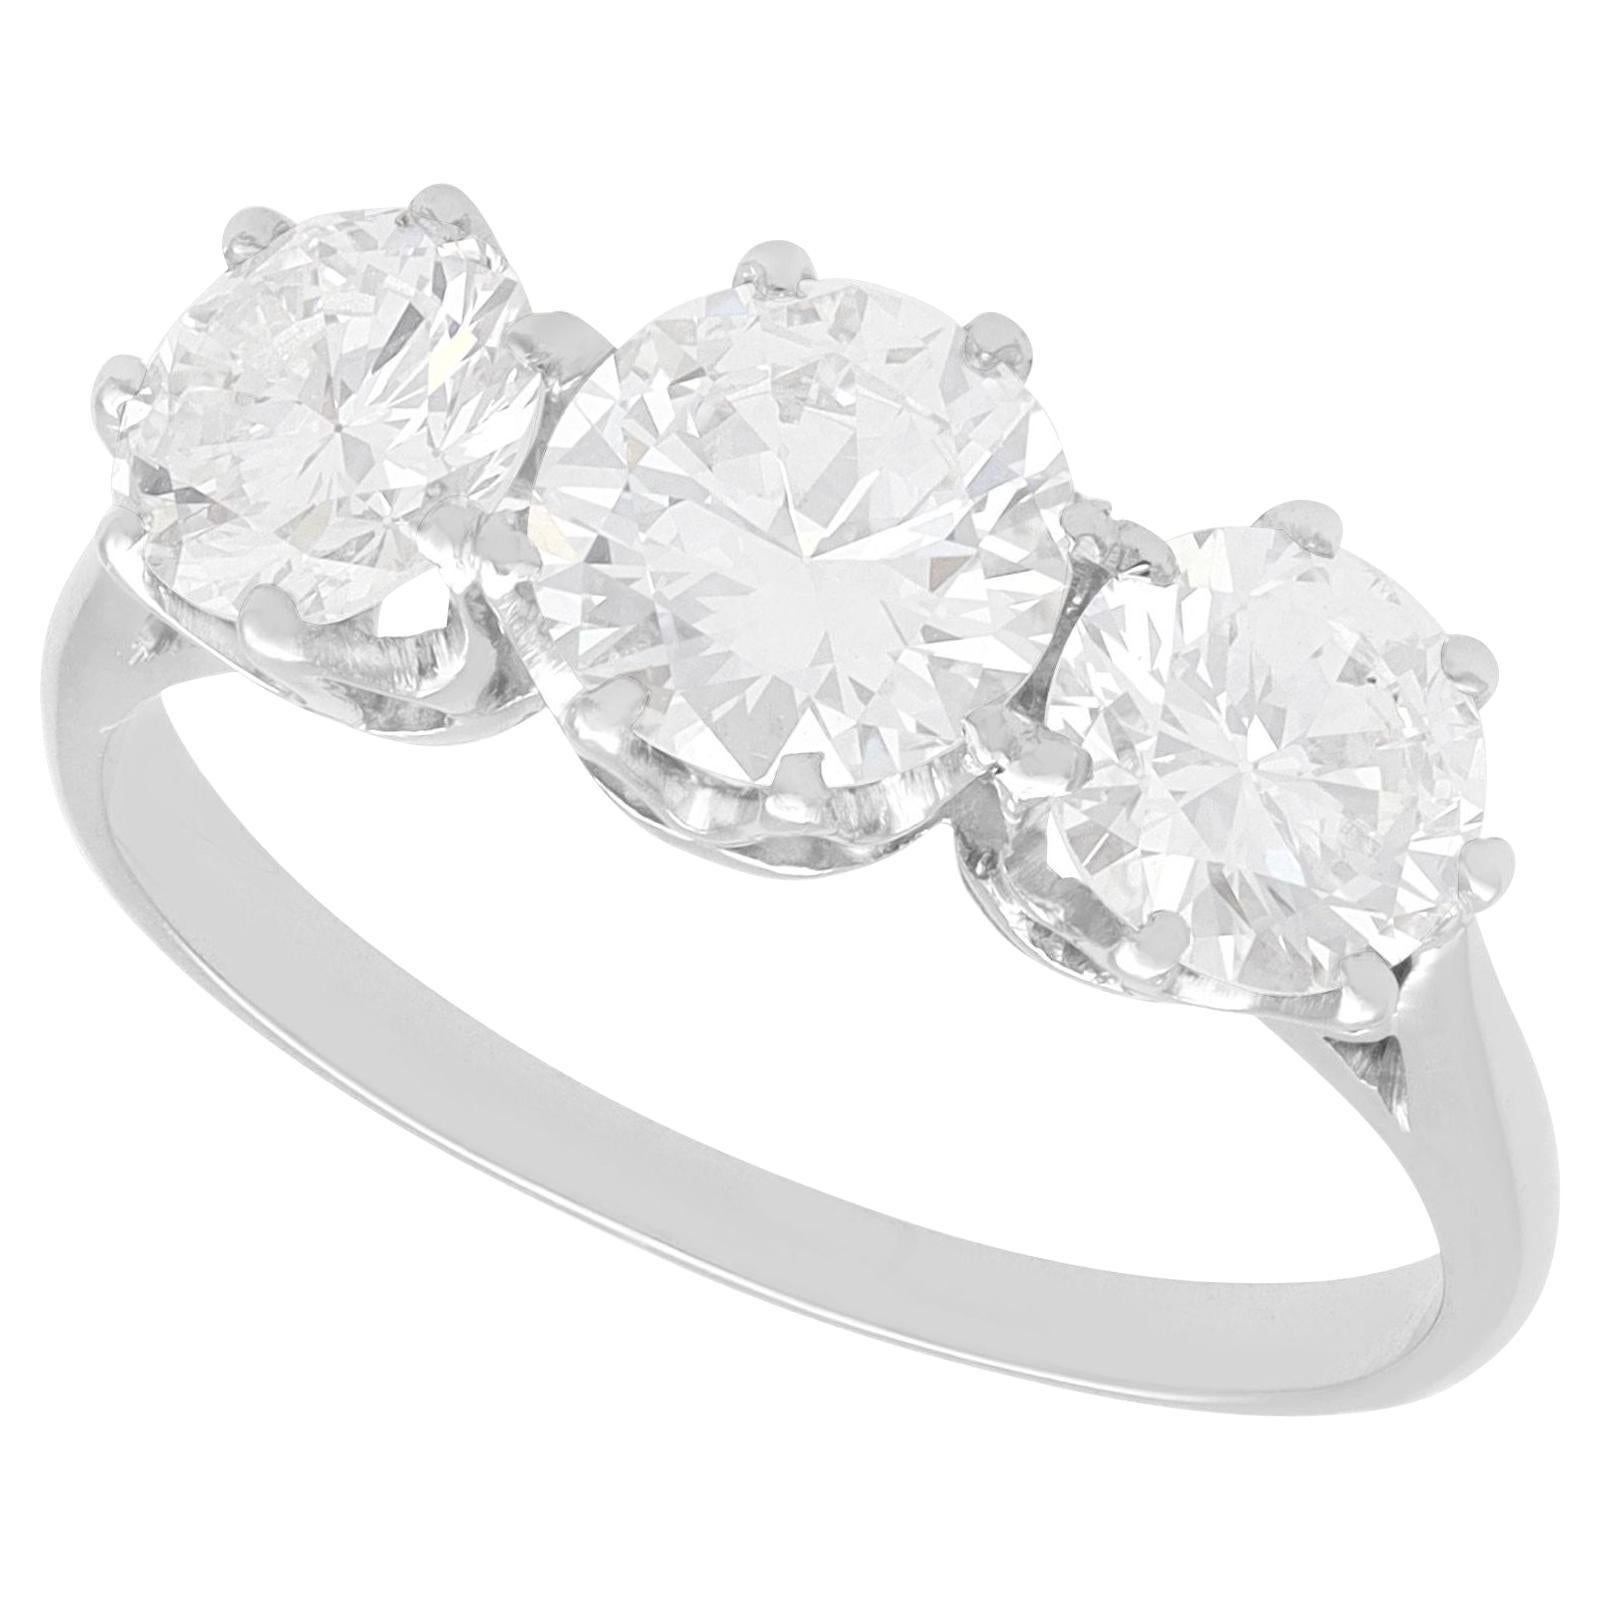 Antique 2.05 Carat Diamond and Platinum Trilogy Engagement Ring